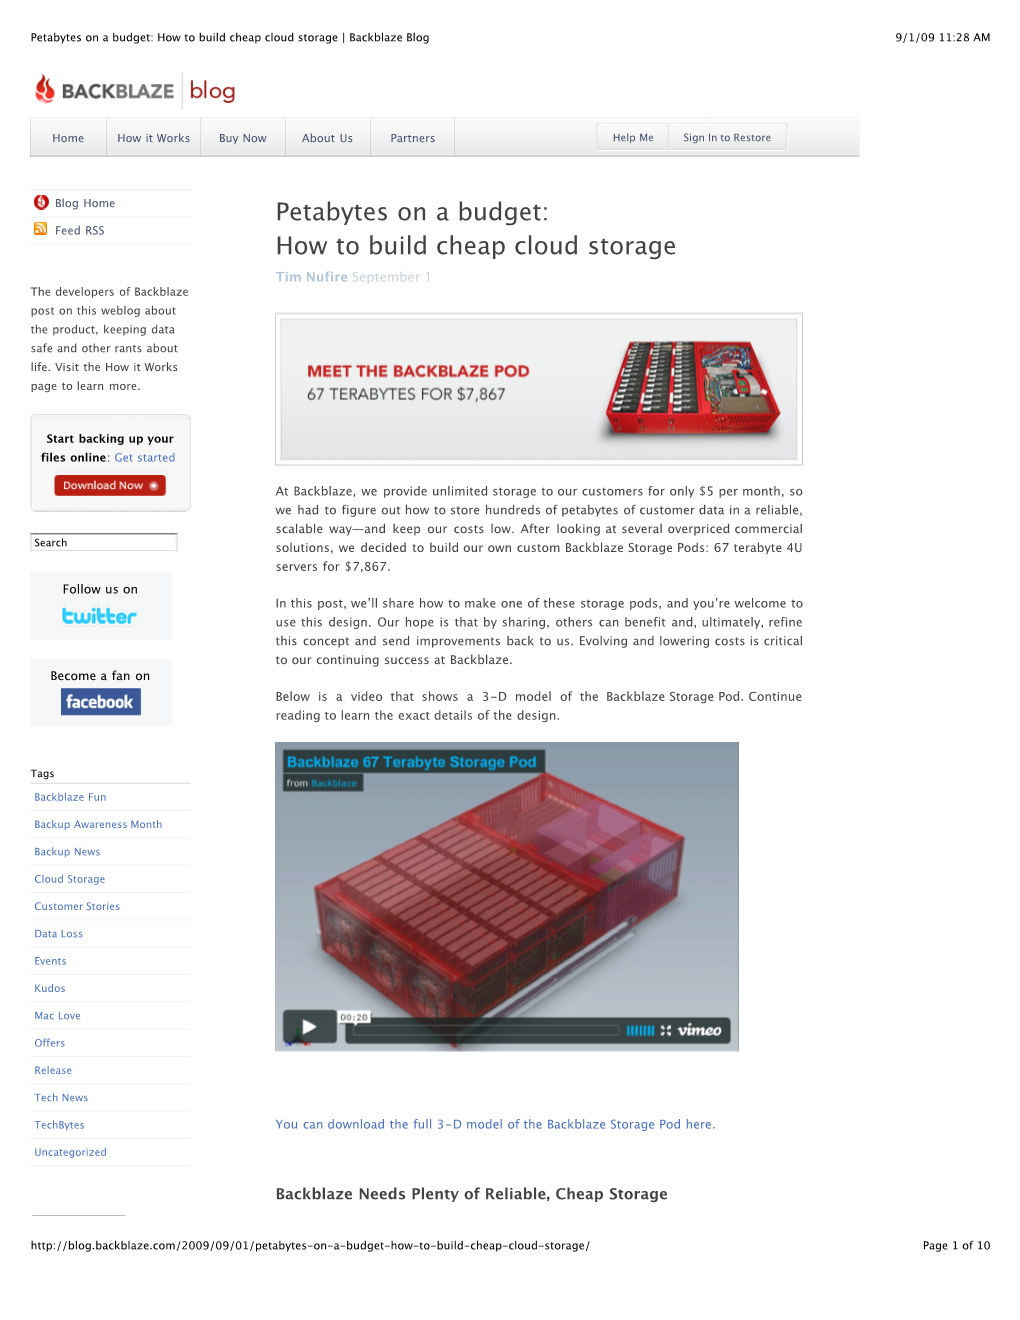 Petabytes on a Budget: How to Build Cheap Cloud Storage | Backblaze Blog 9/1/09 11:28 AM